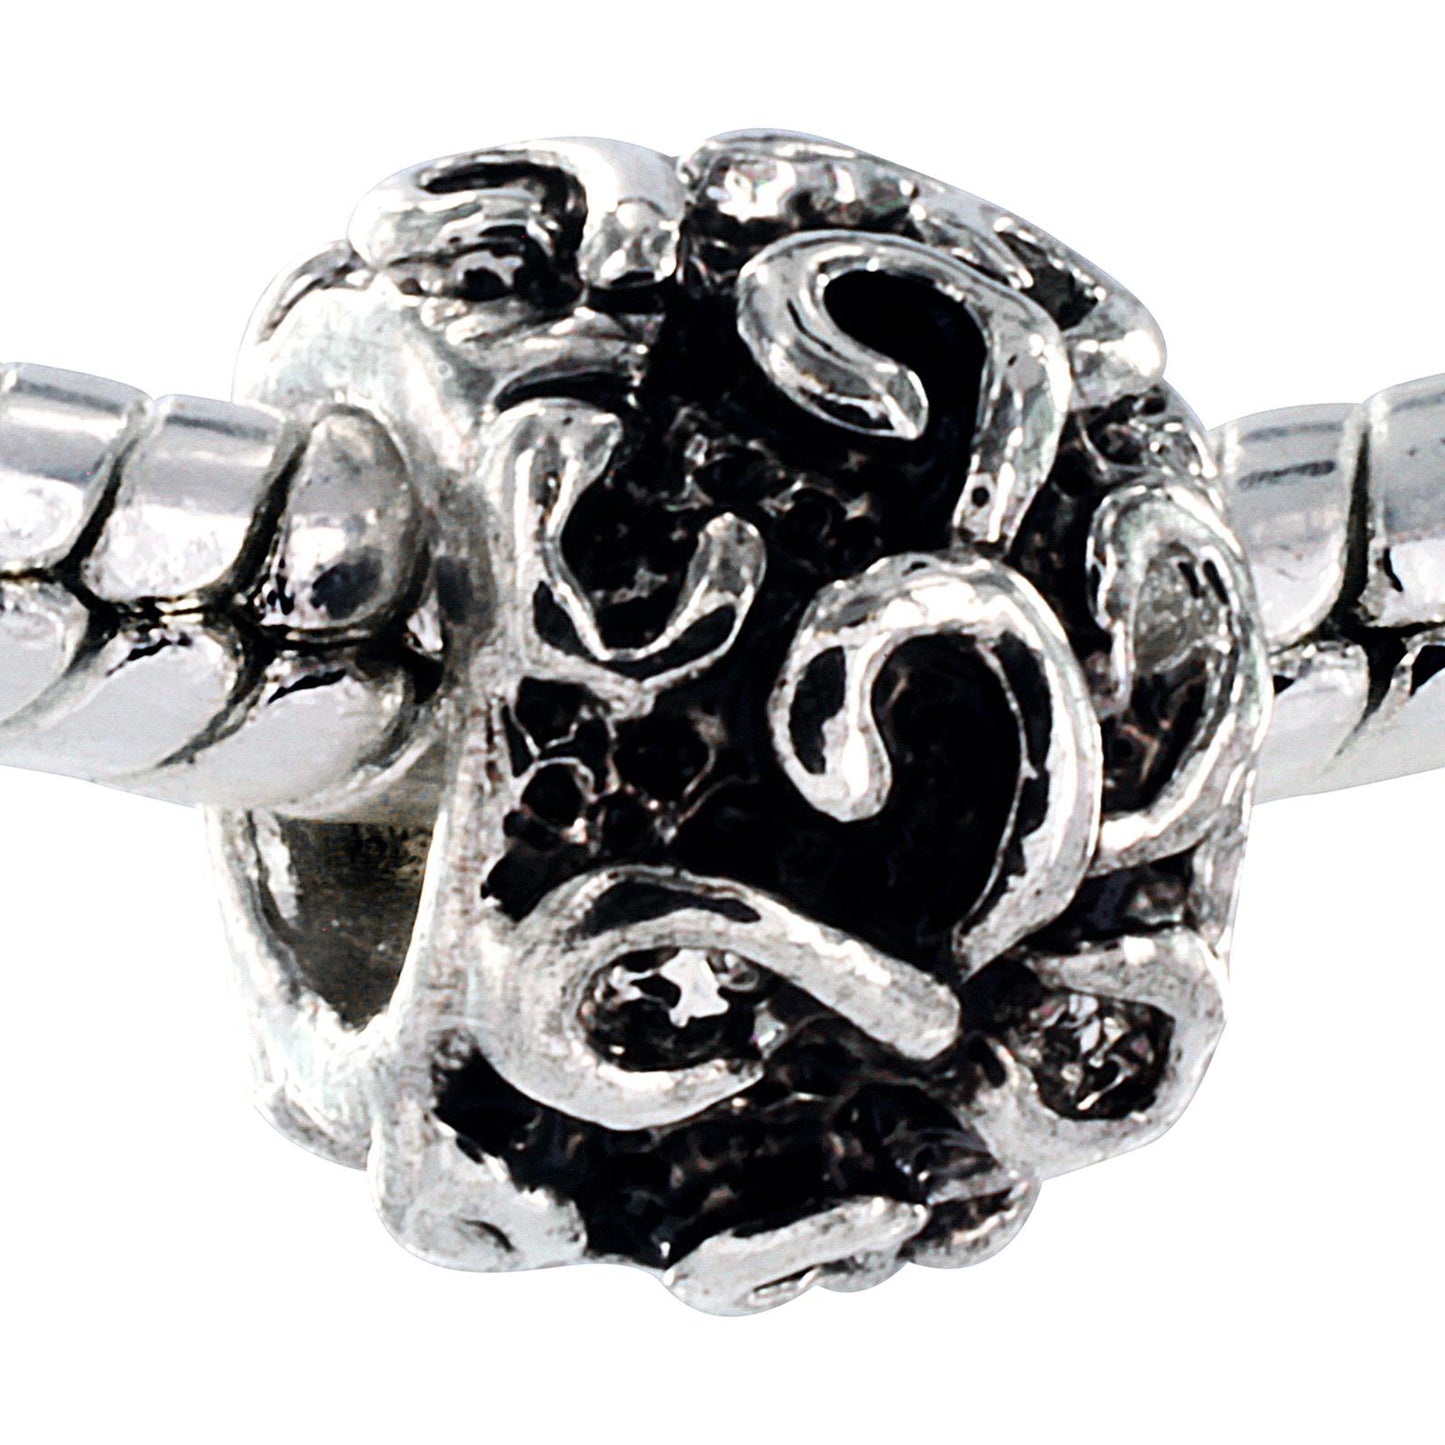 Silver Plated Swirl Design Bead